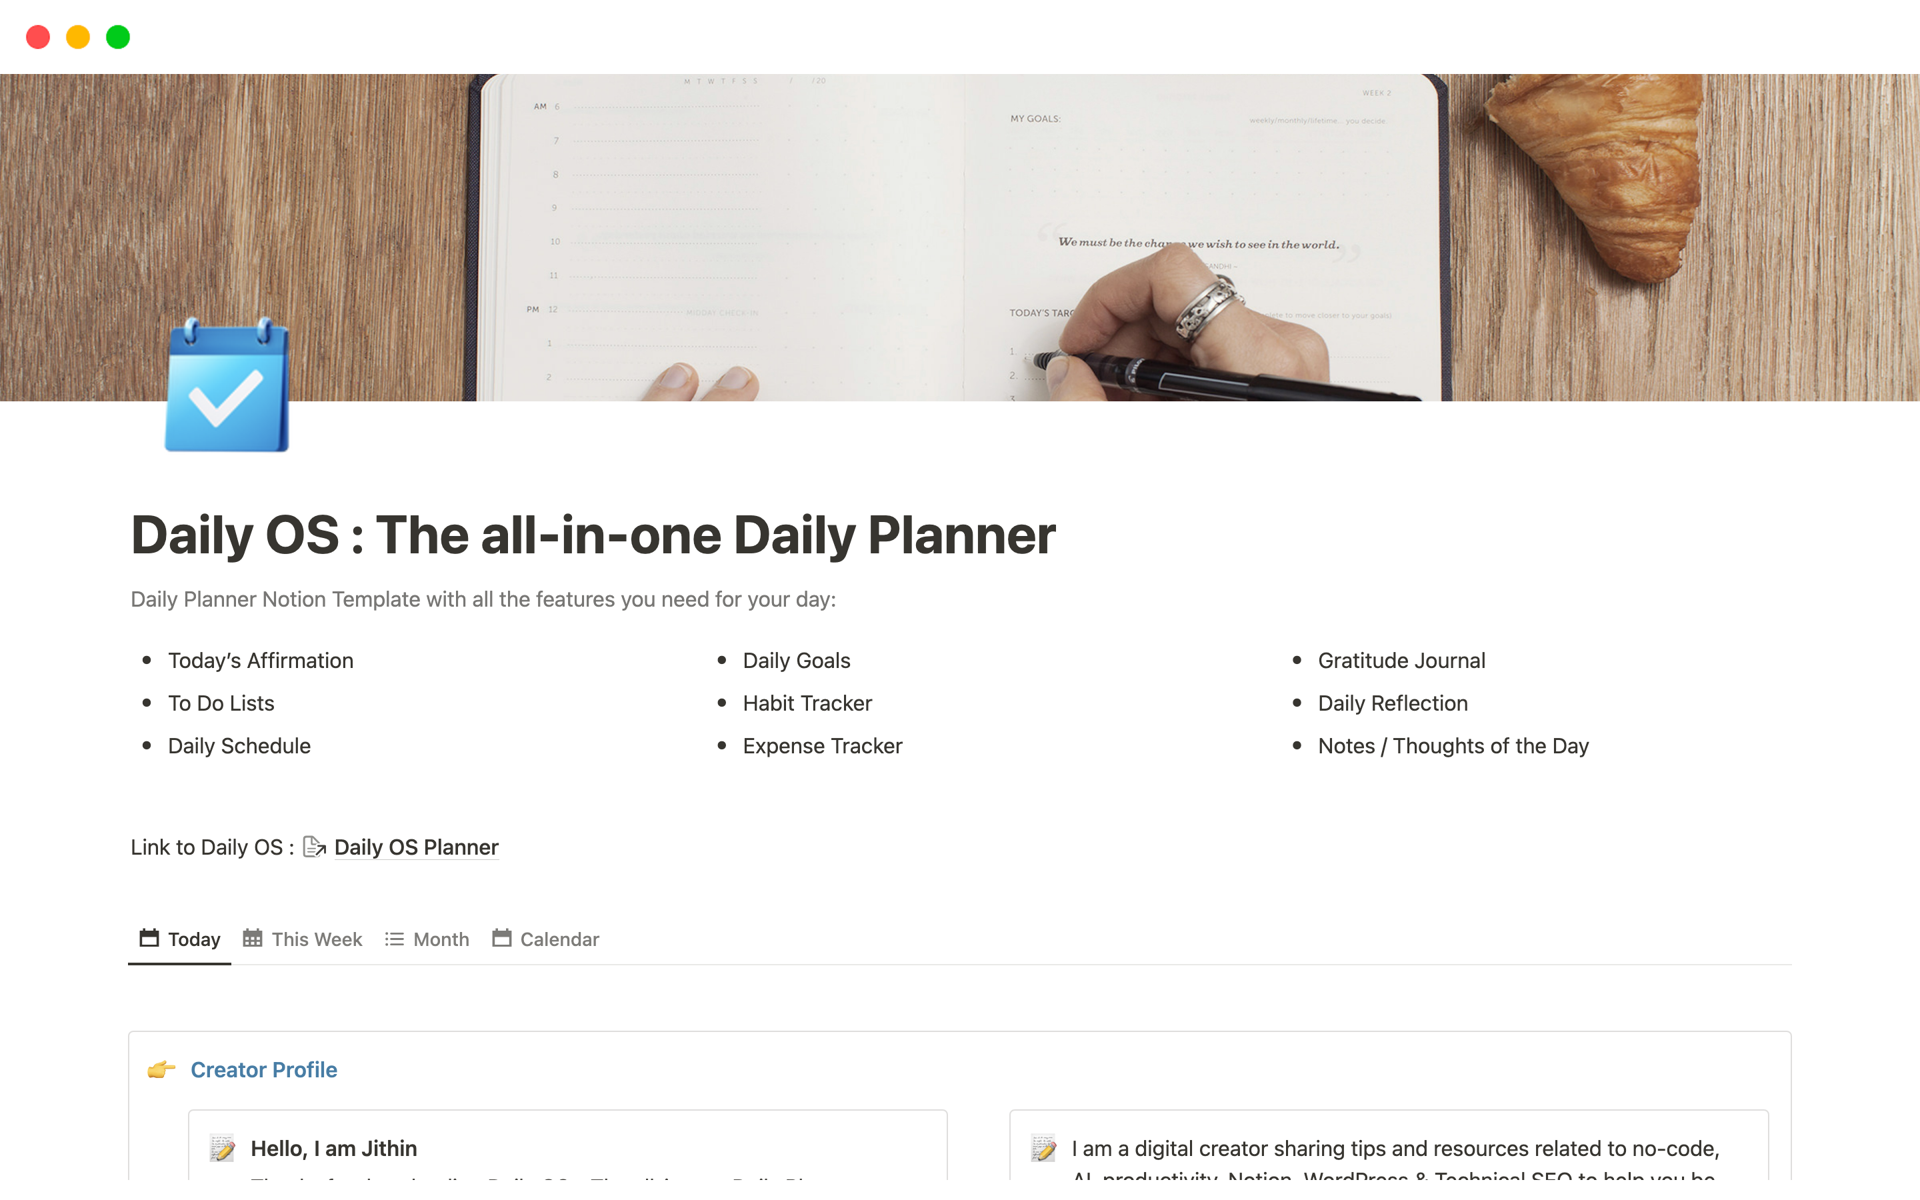 Vista previa de una plantilla para Daily OS Daily Planner